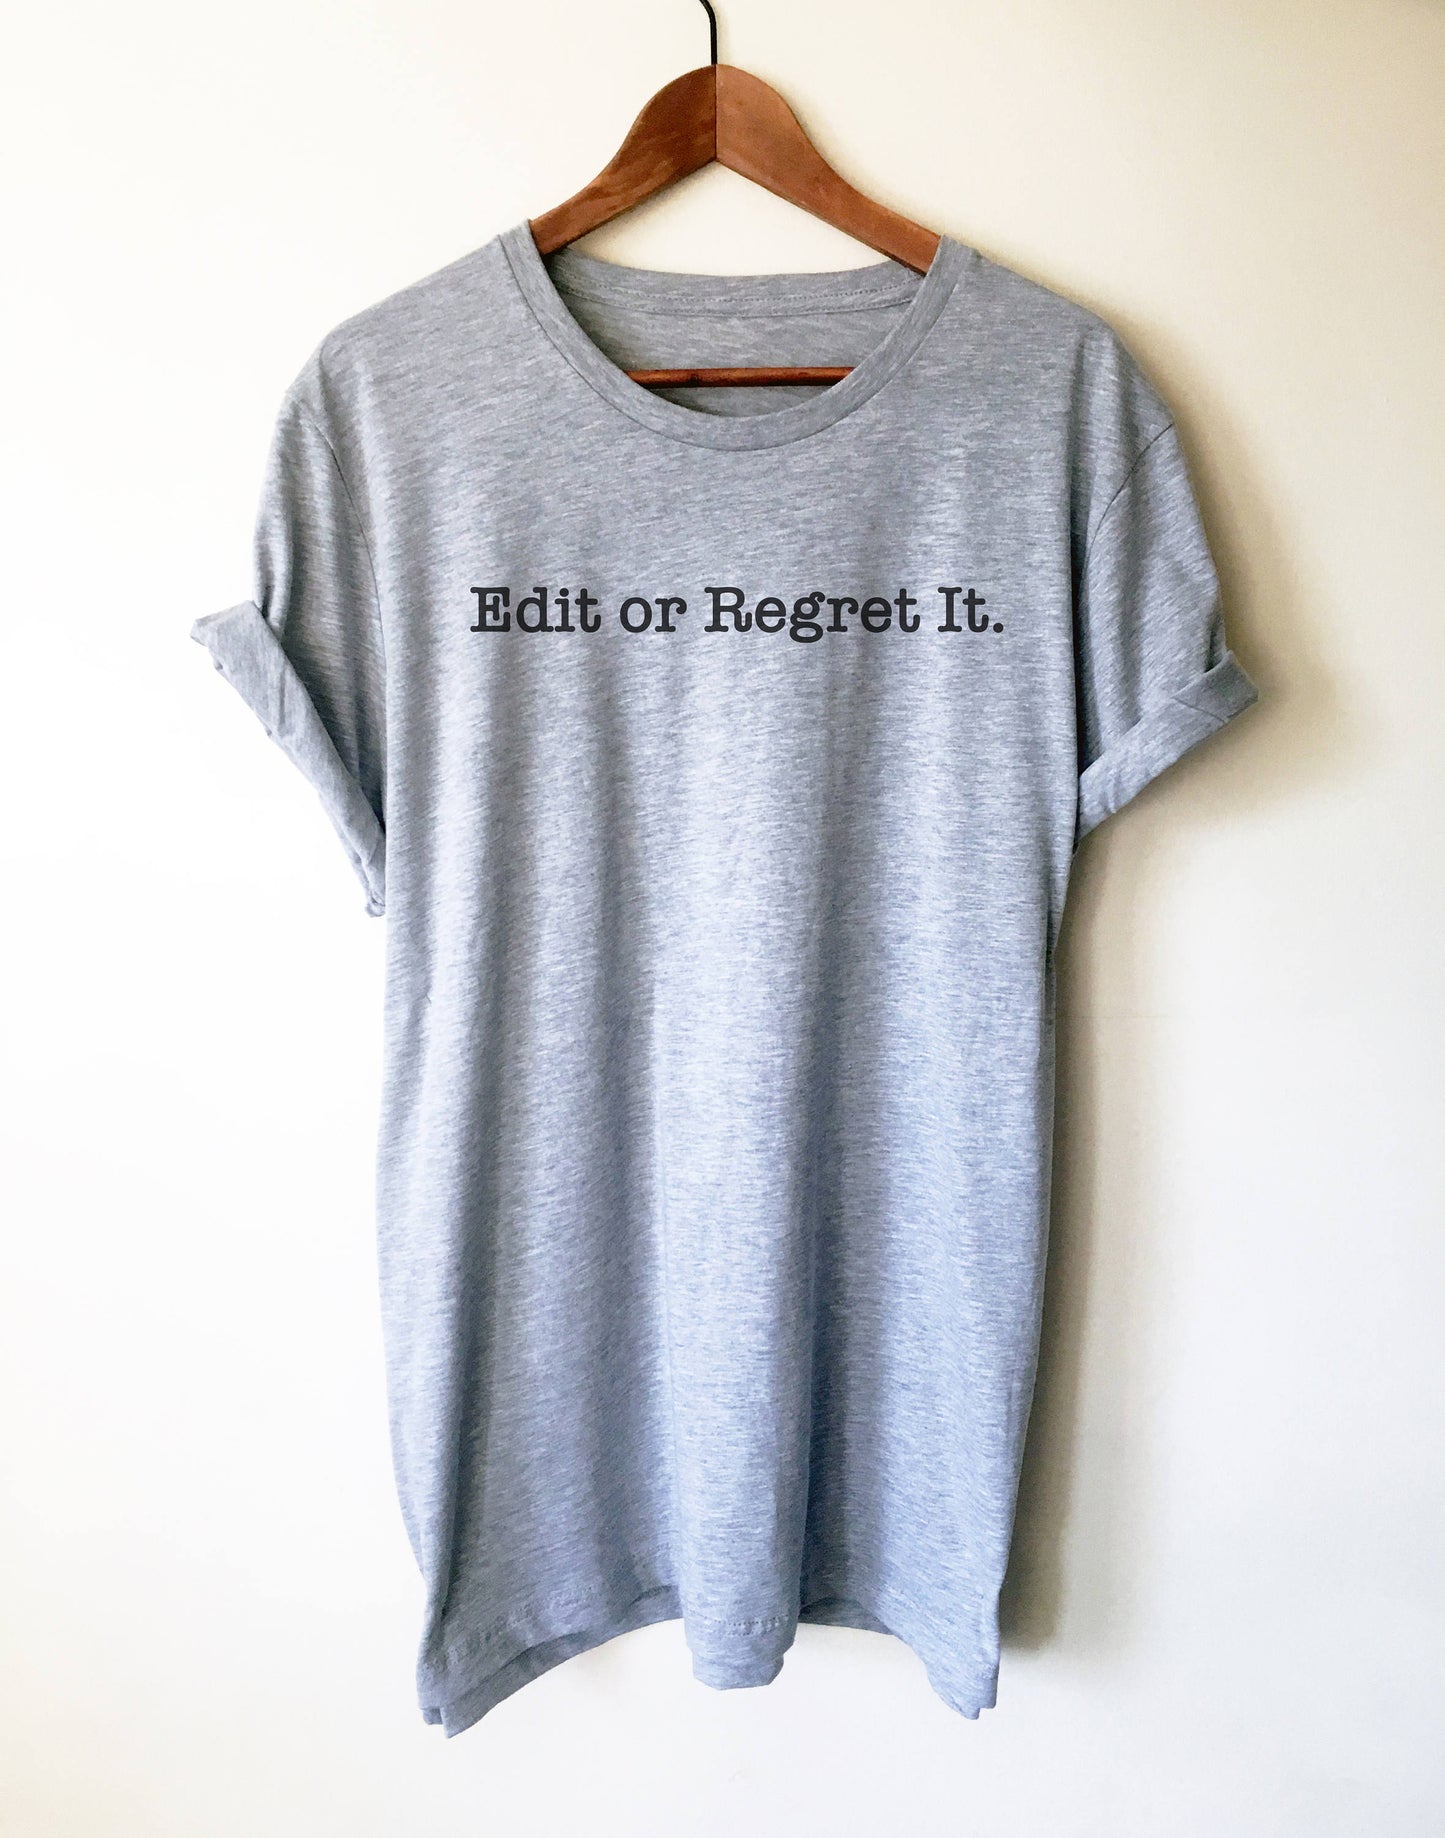 Edit Or Regret It Unisex Shirt - English Teacher Shirt, English Teacher Gifts, Writer Shirt, Editor Shirt, Grammar Police, English Major